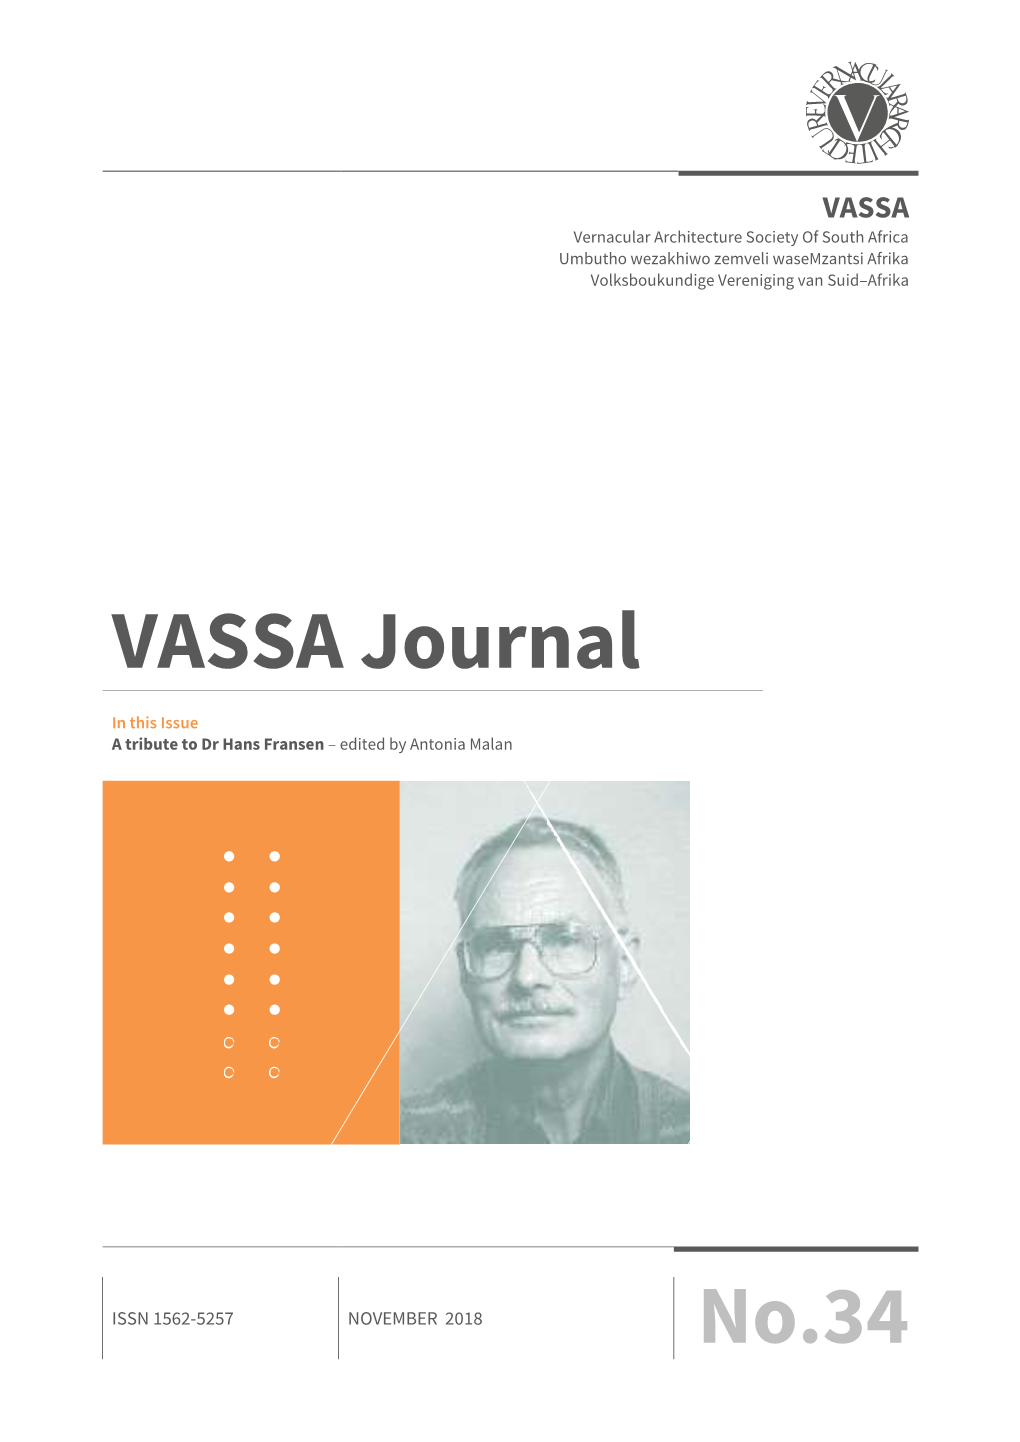 No.34 VASSA Journal